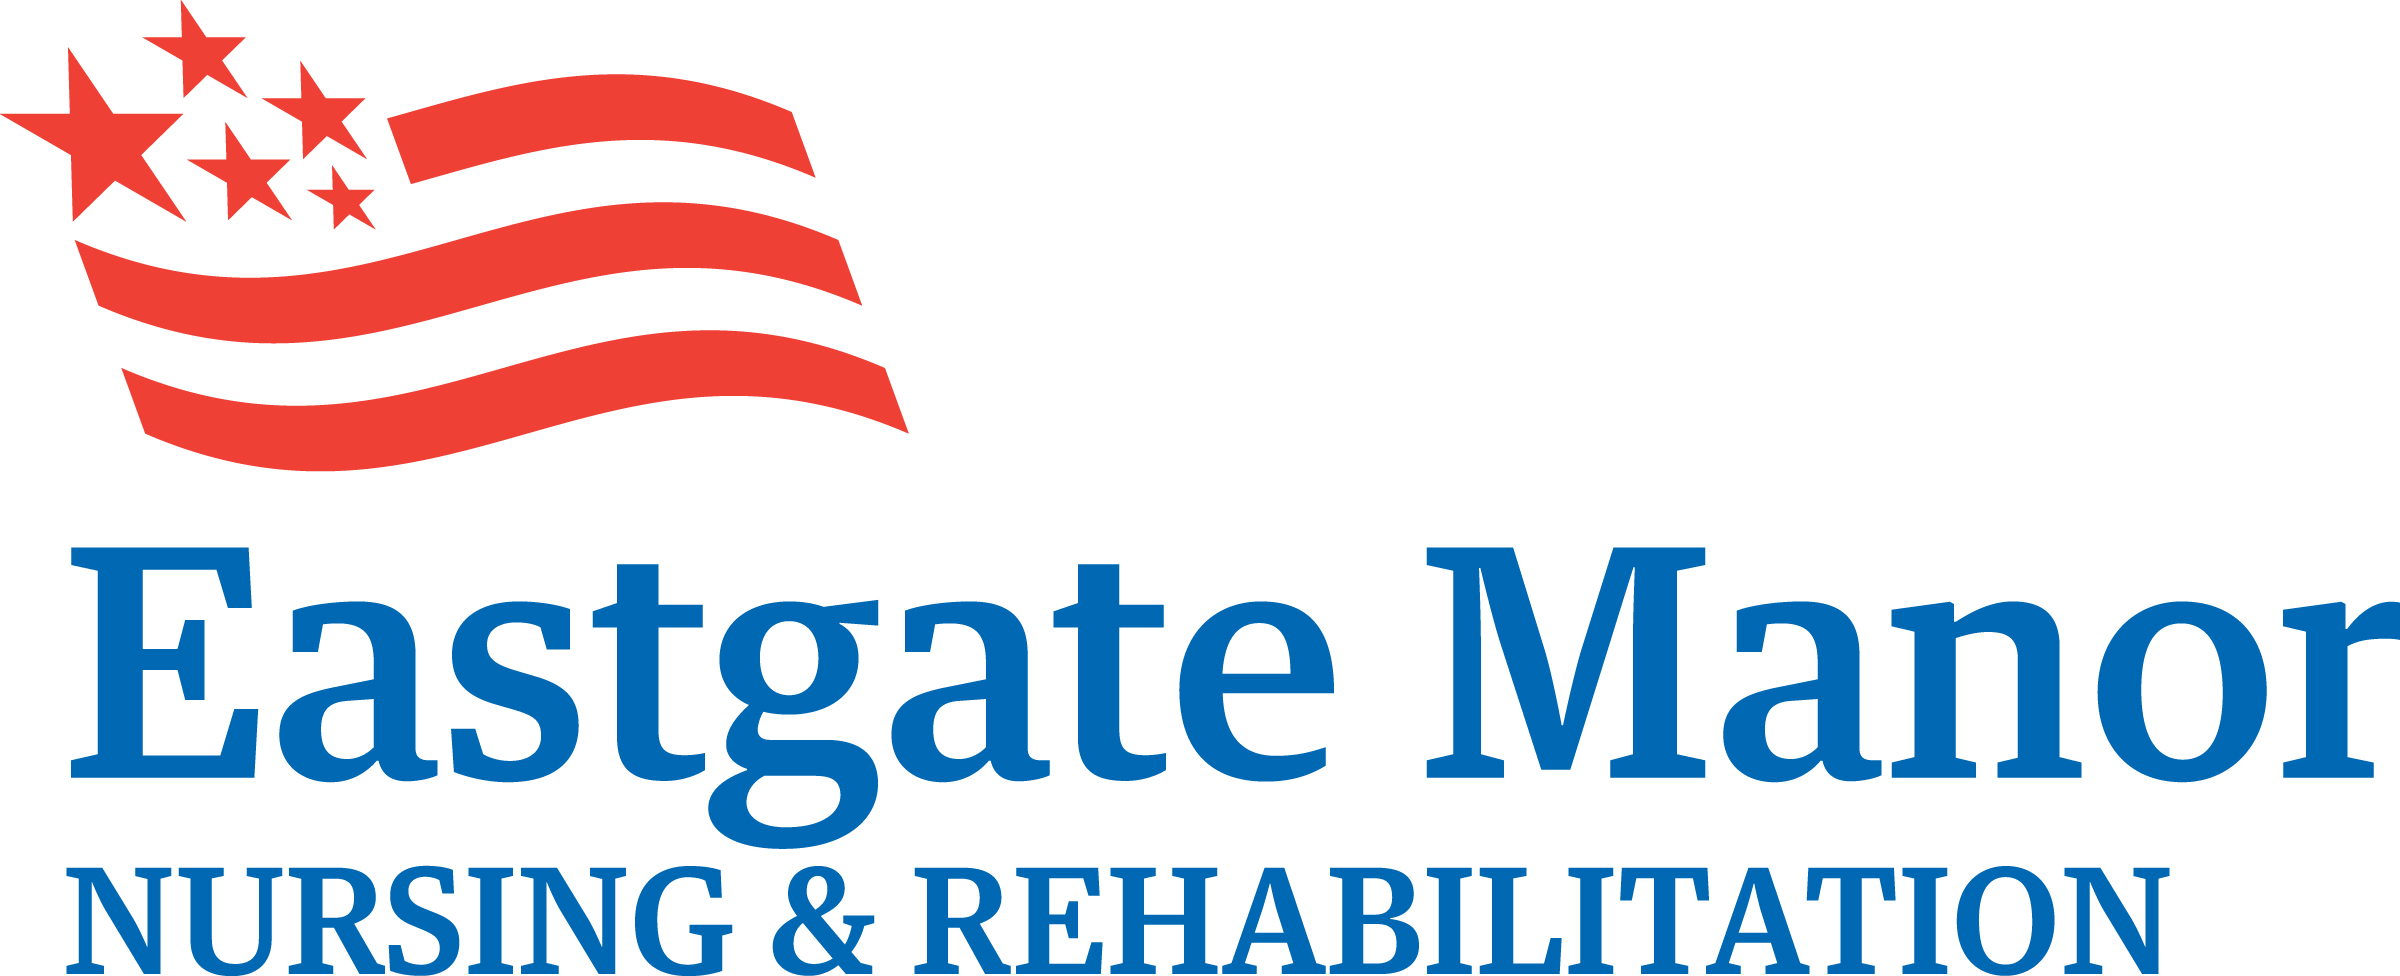 Eastgate Manor Nursing & Rehabilitation image